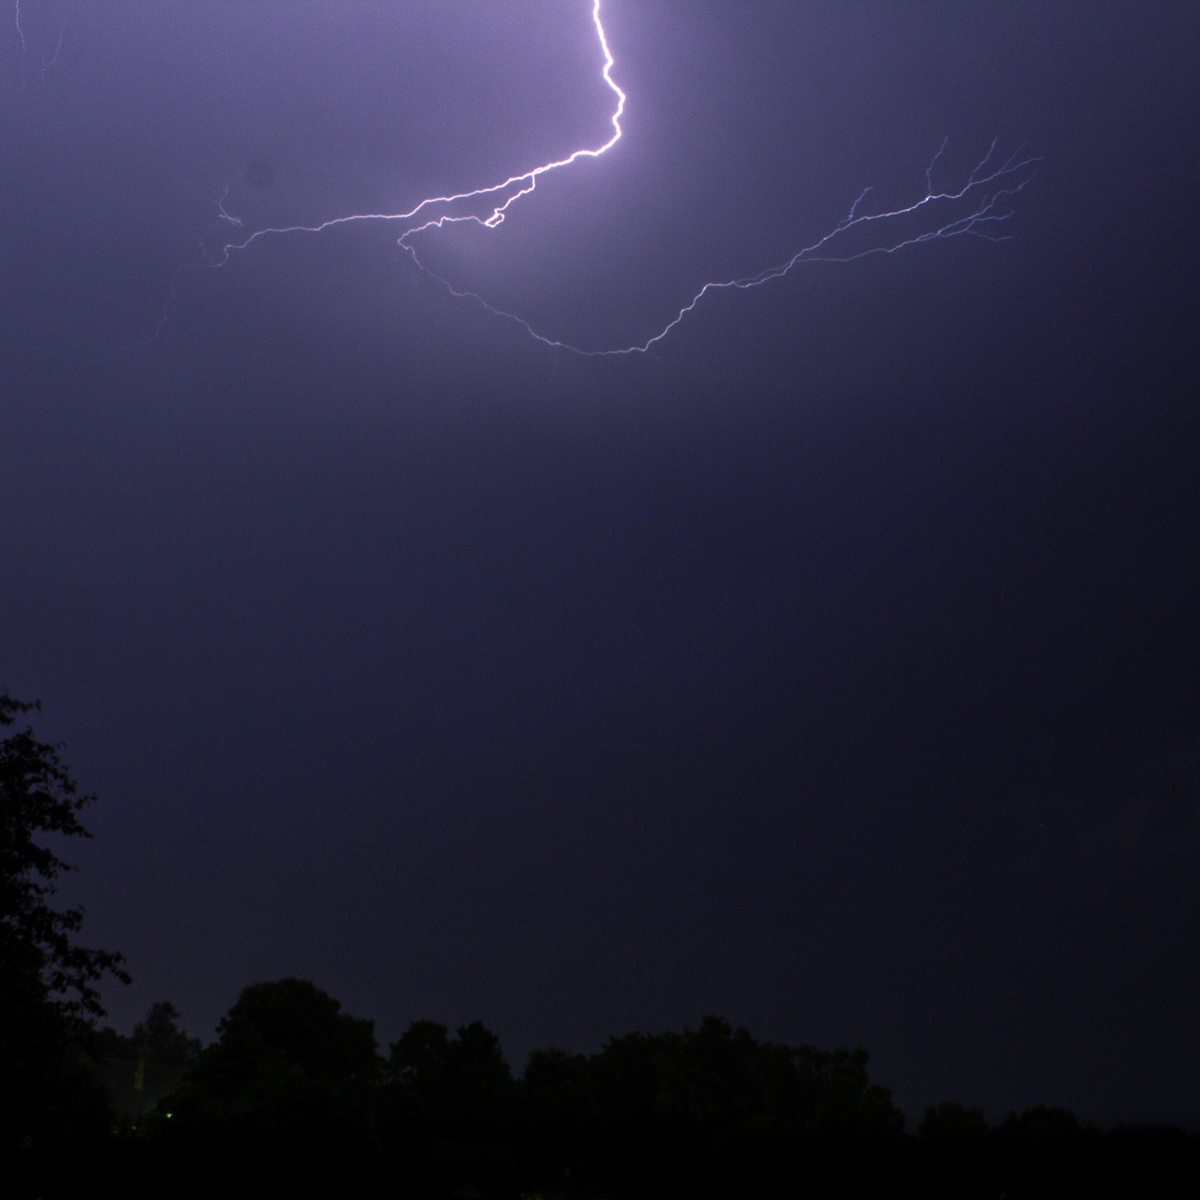 gewitter lightning lightning bolt thunderstorm sturm electricity Flash